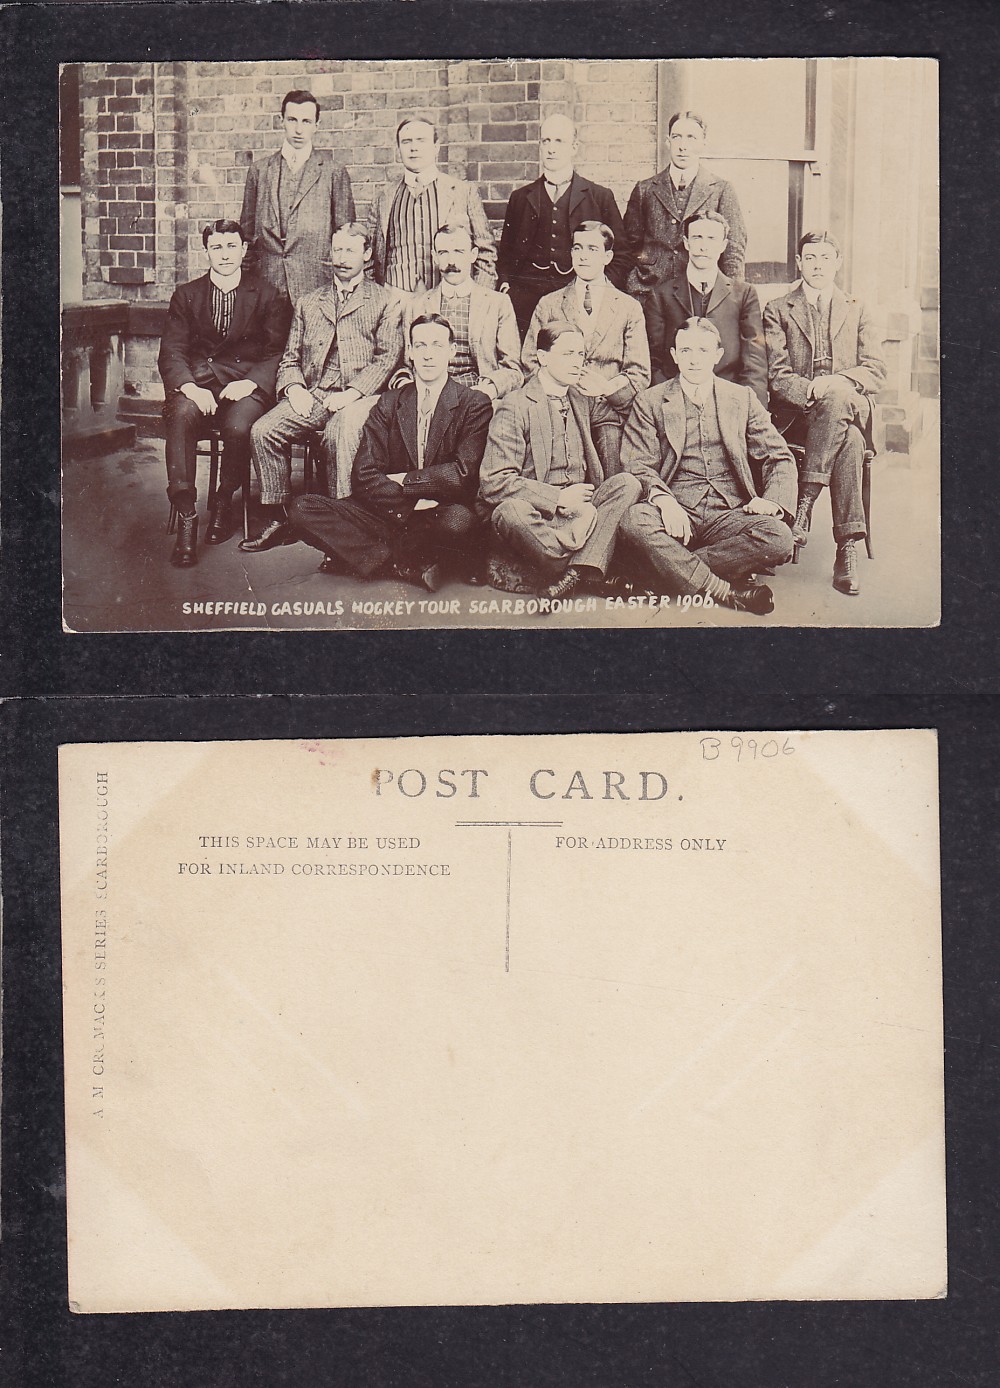 1906 TORARTO HOCKEY TEAM POST CARD photo